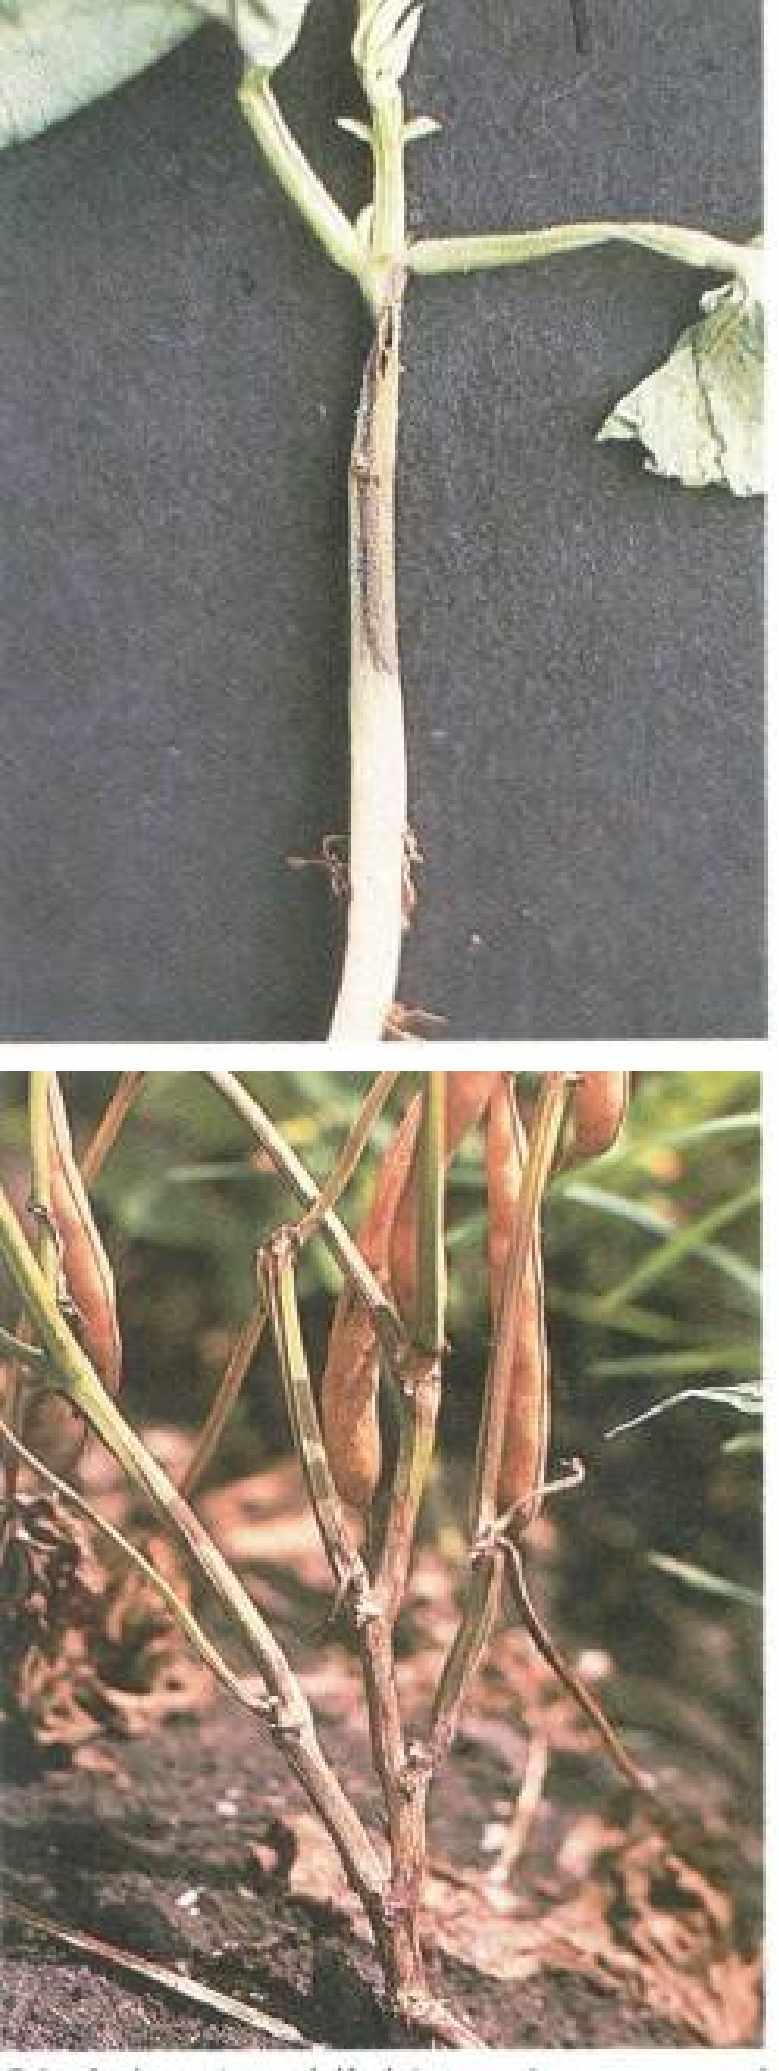 45 Ashy stem blight on stem of seeding caused by Macrophomina